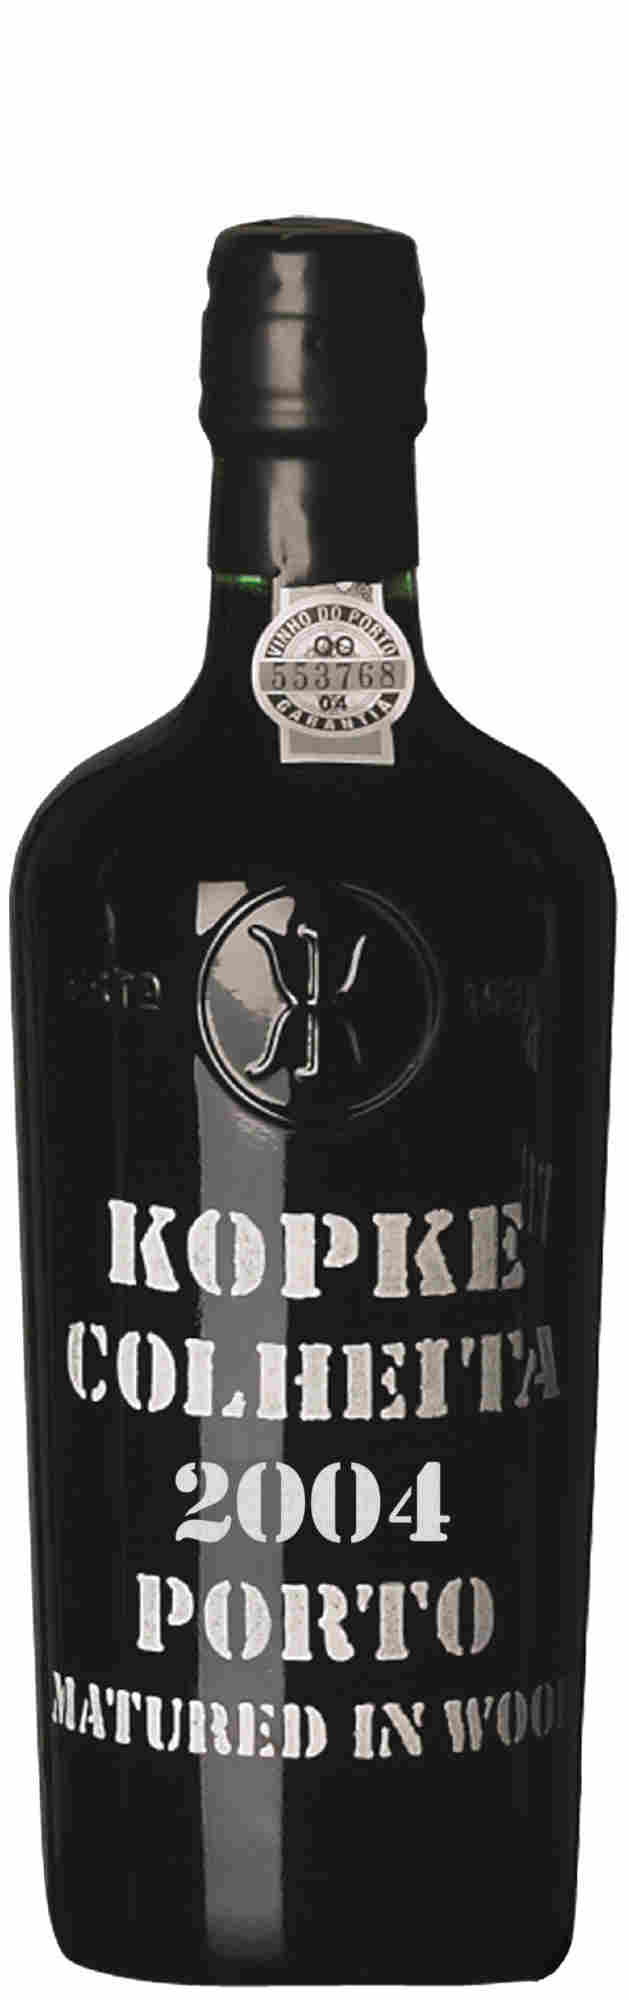 Kopke-Colheita-Port-2004